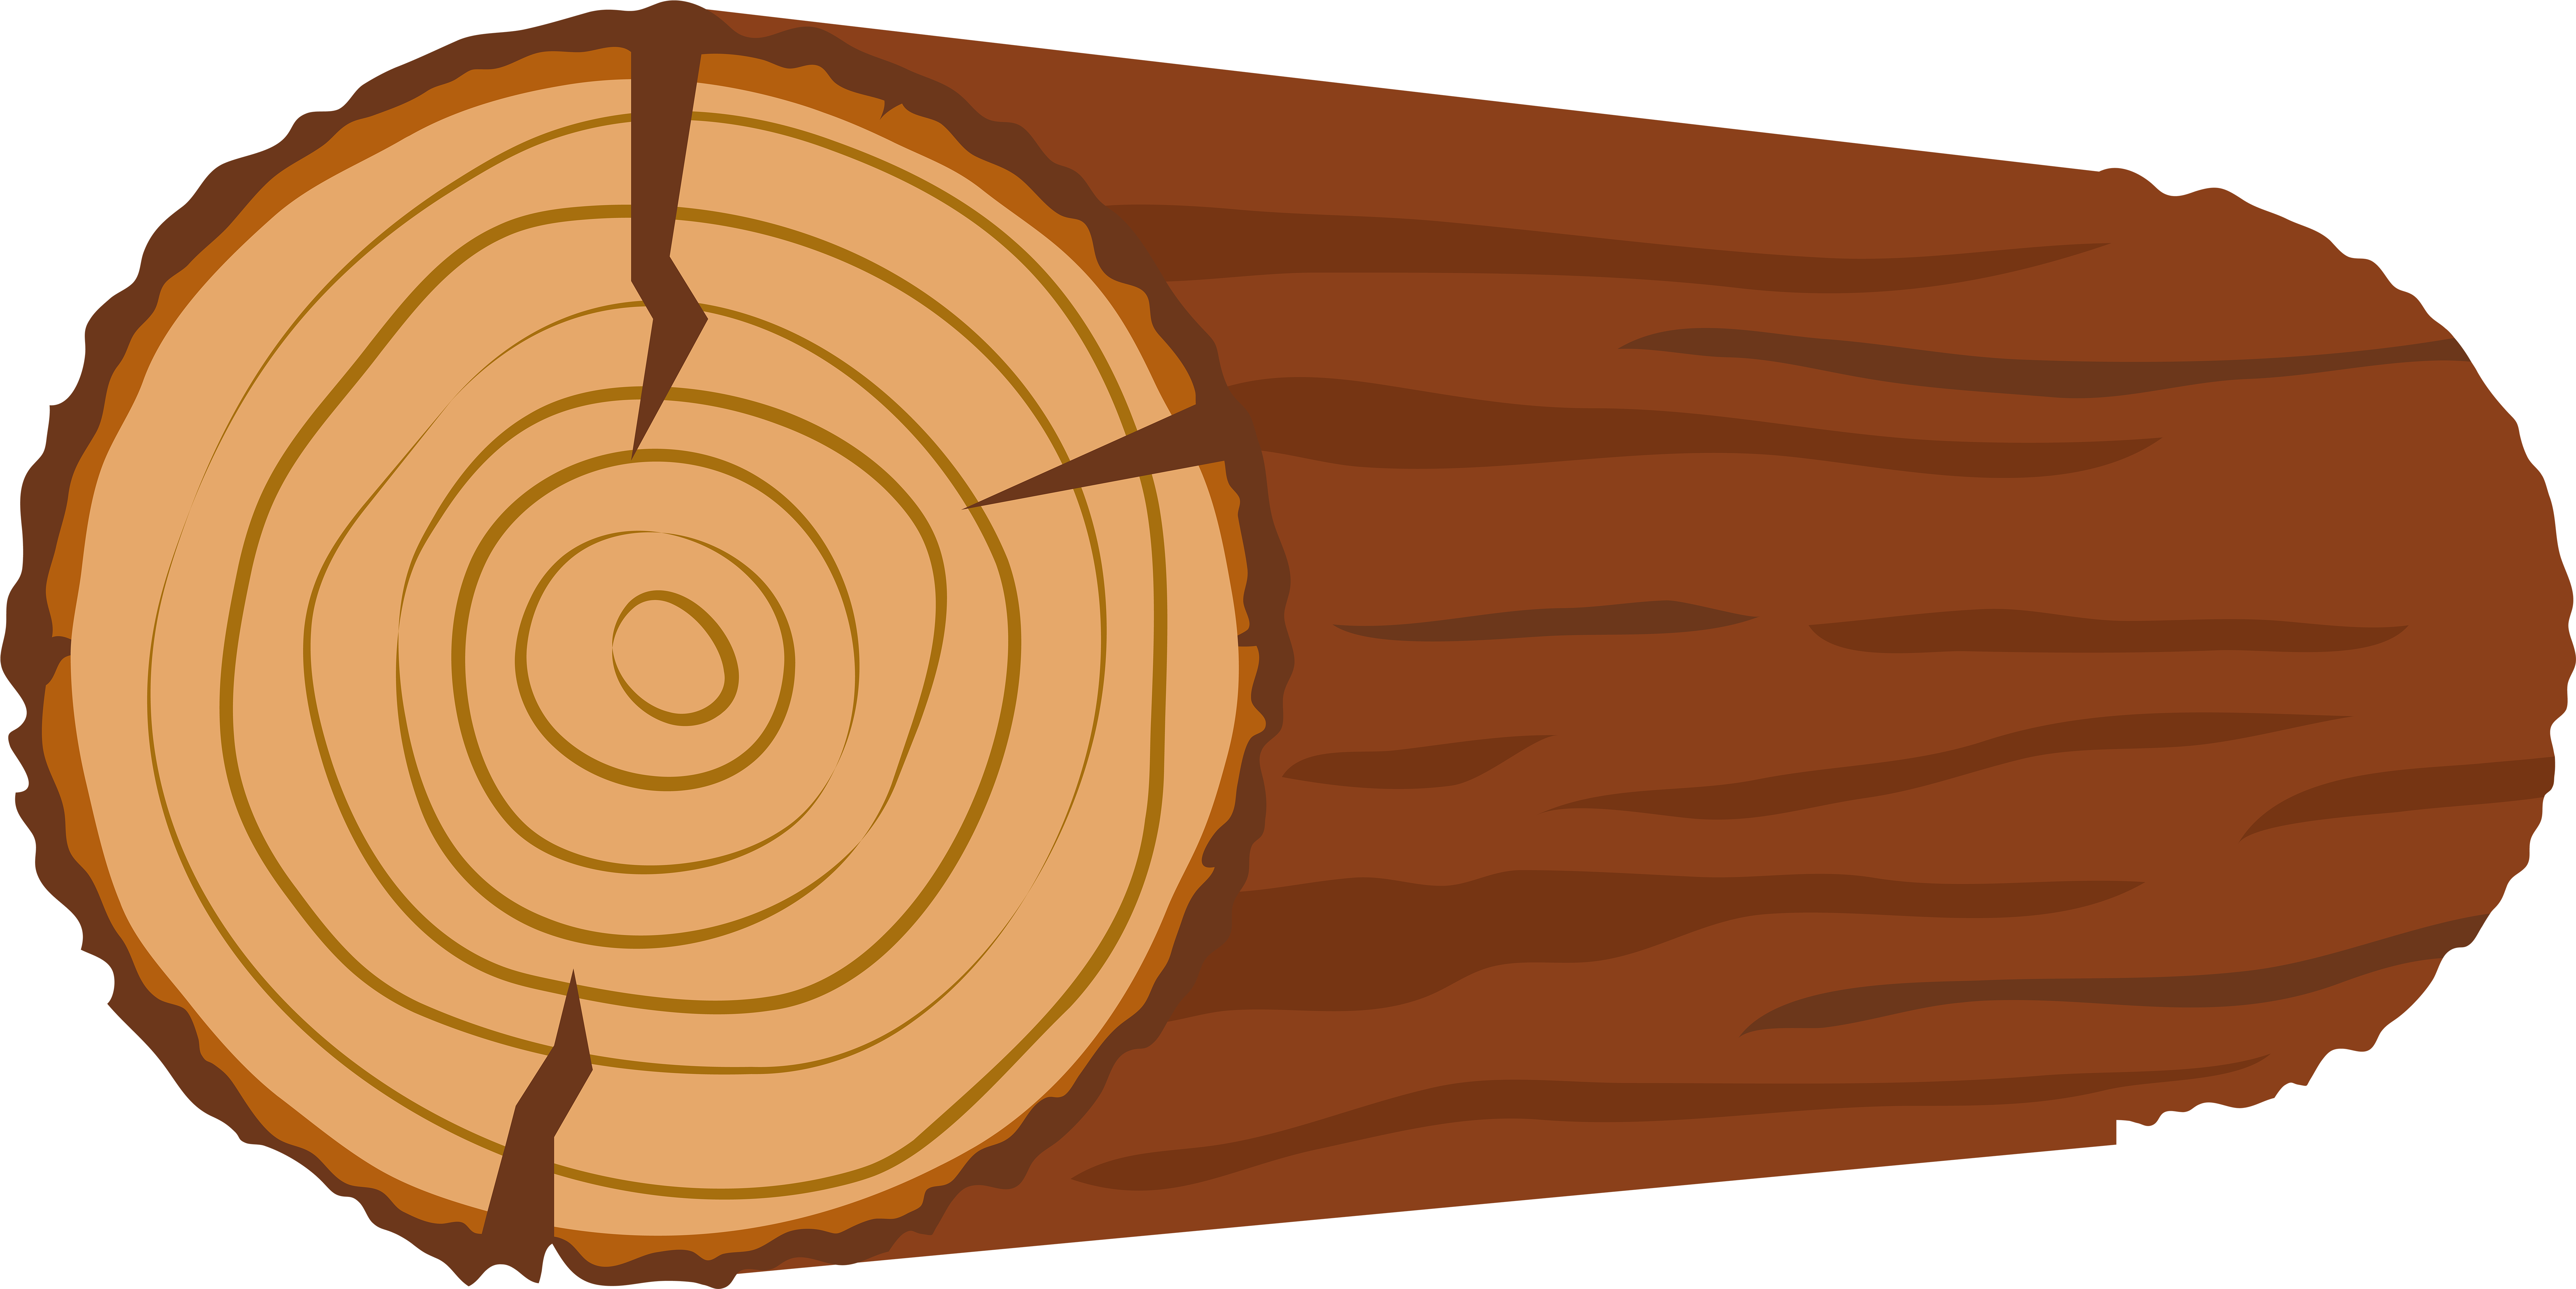 Tree Log Cross Section Illustration PNG